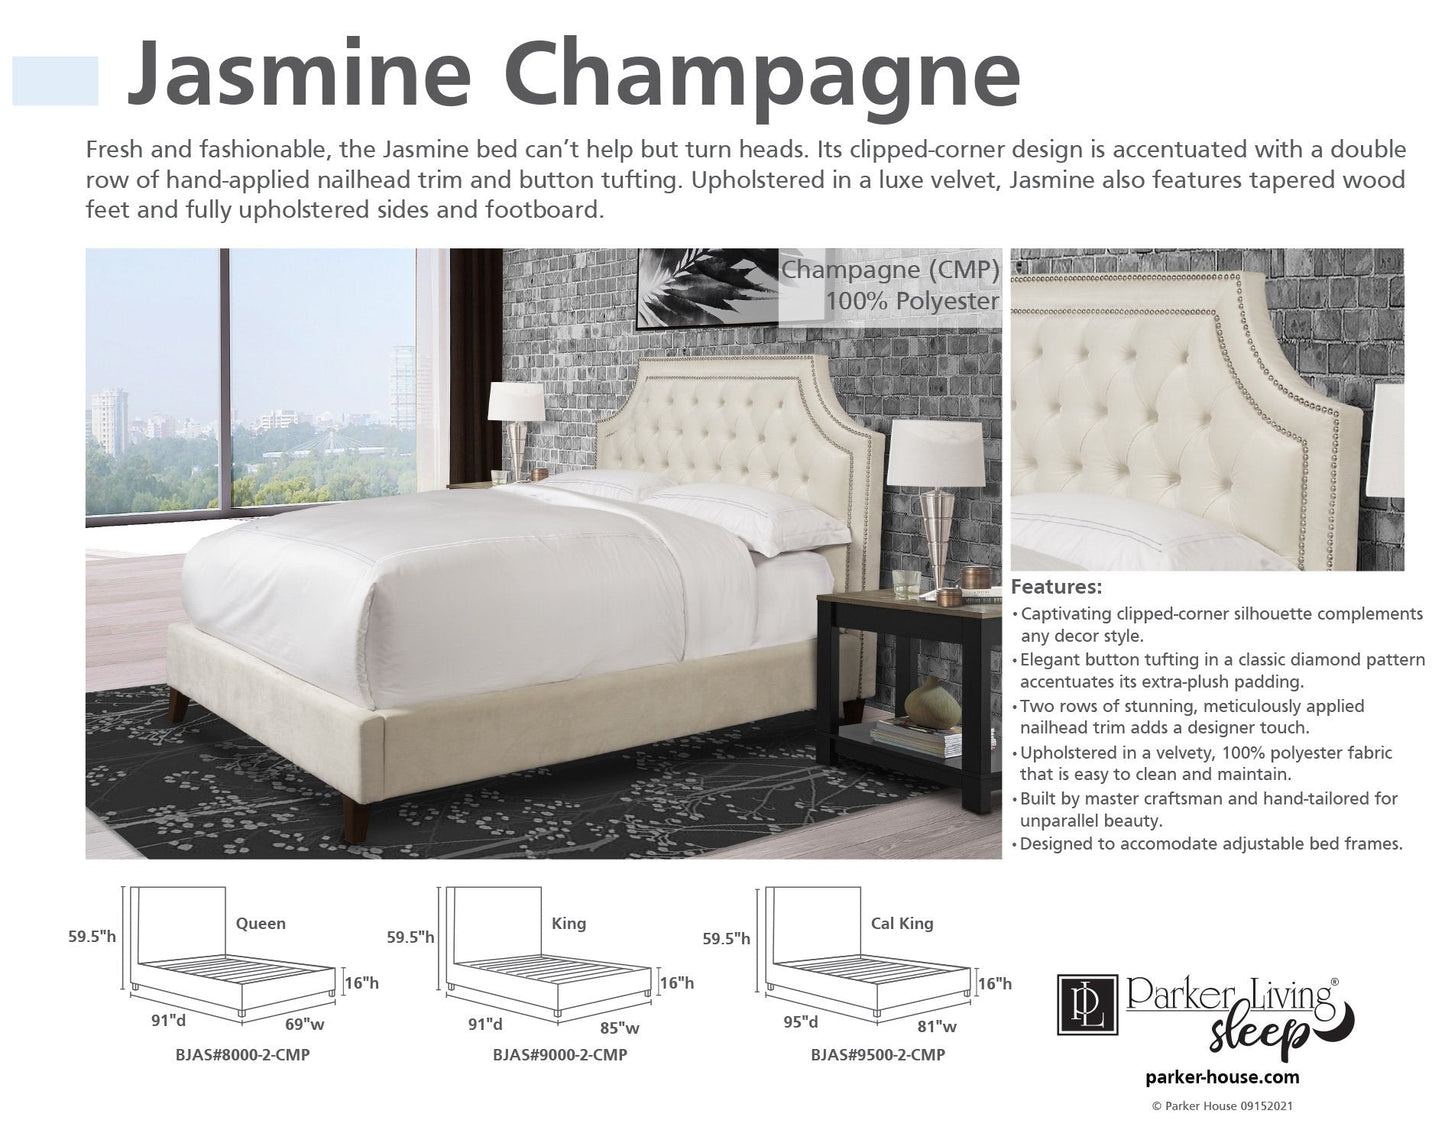 JASMINE - CHAMPAGNE KING BED 6/6 (NATURAL)